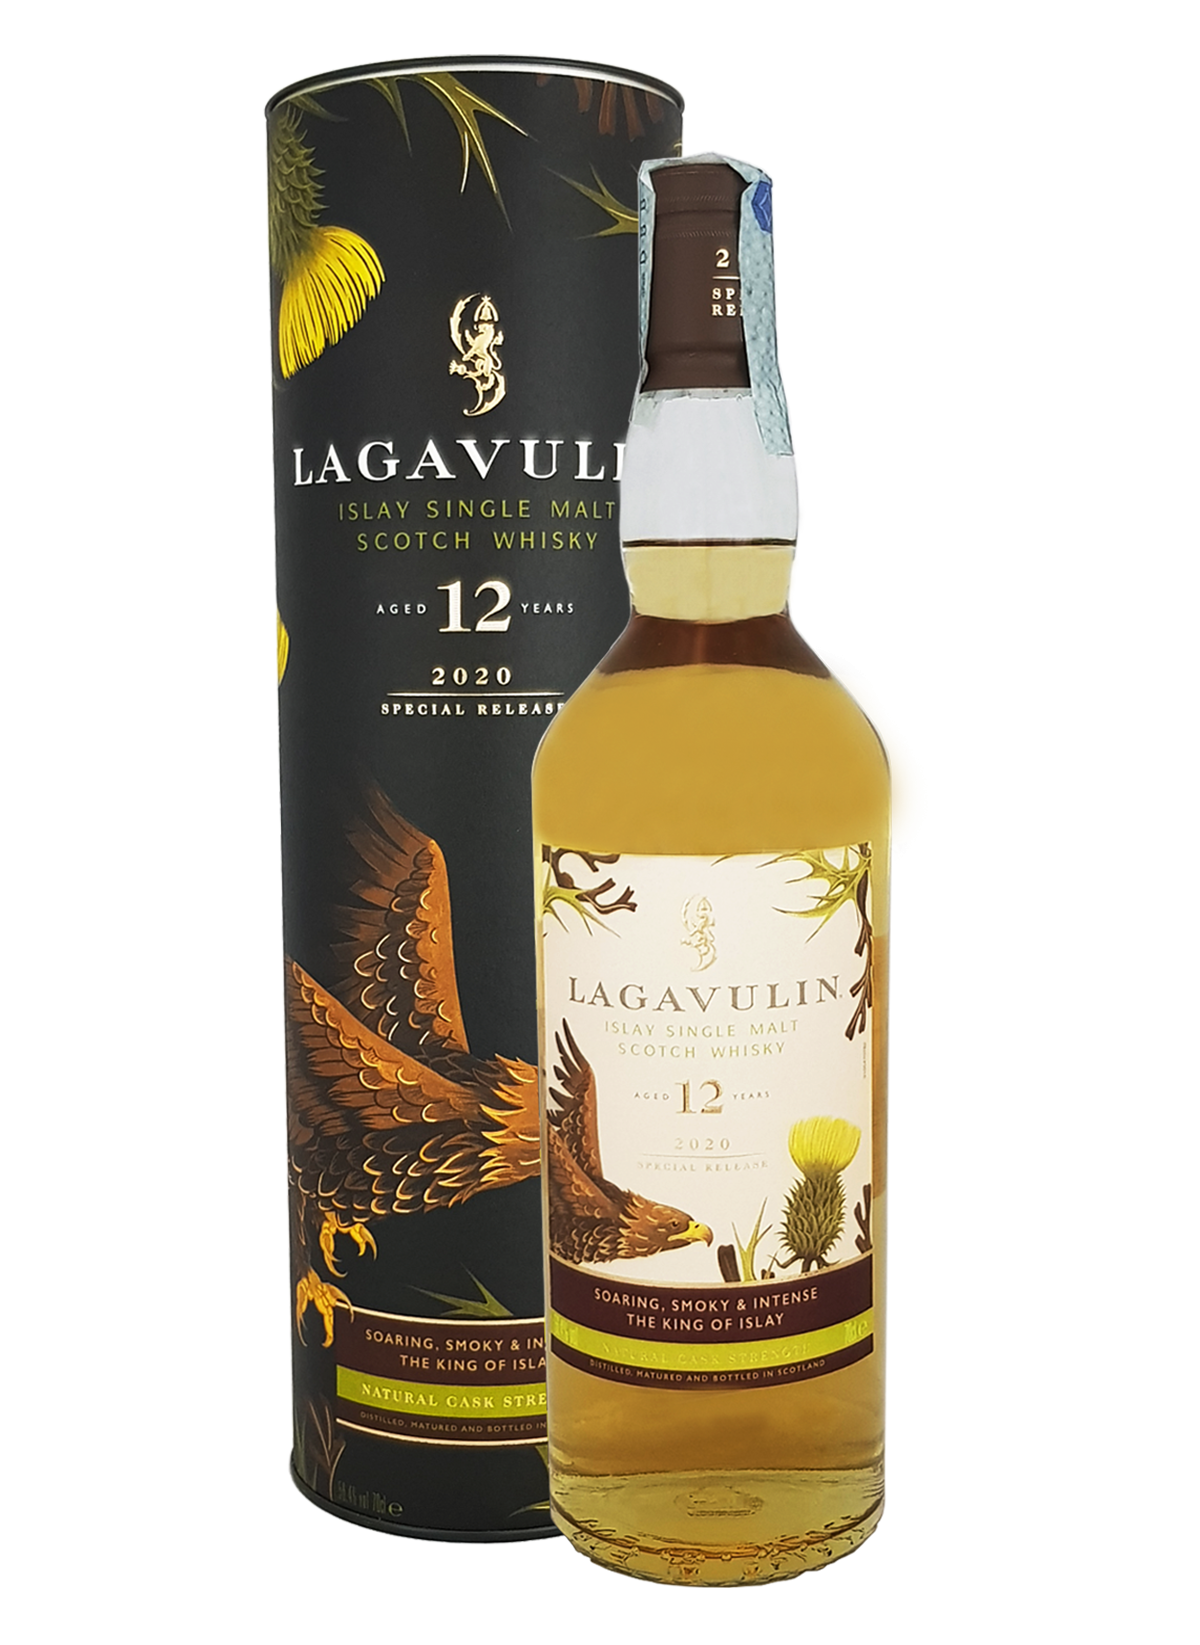 Lagavulin 8 Y.O. Scotch Whisky 70 Cl Astucciato